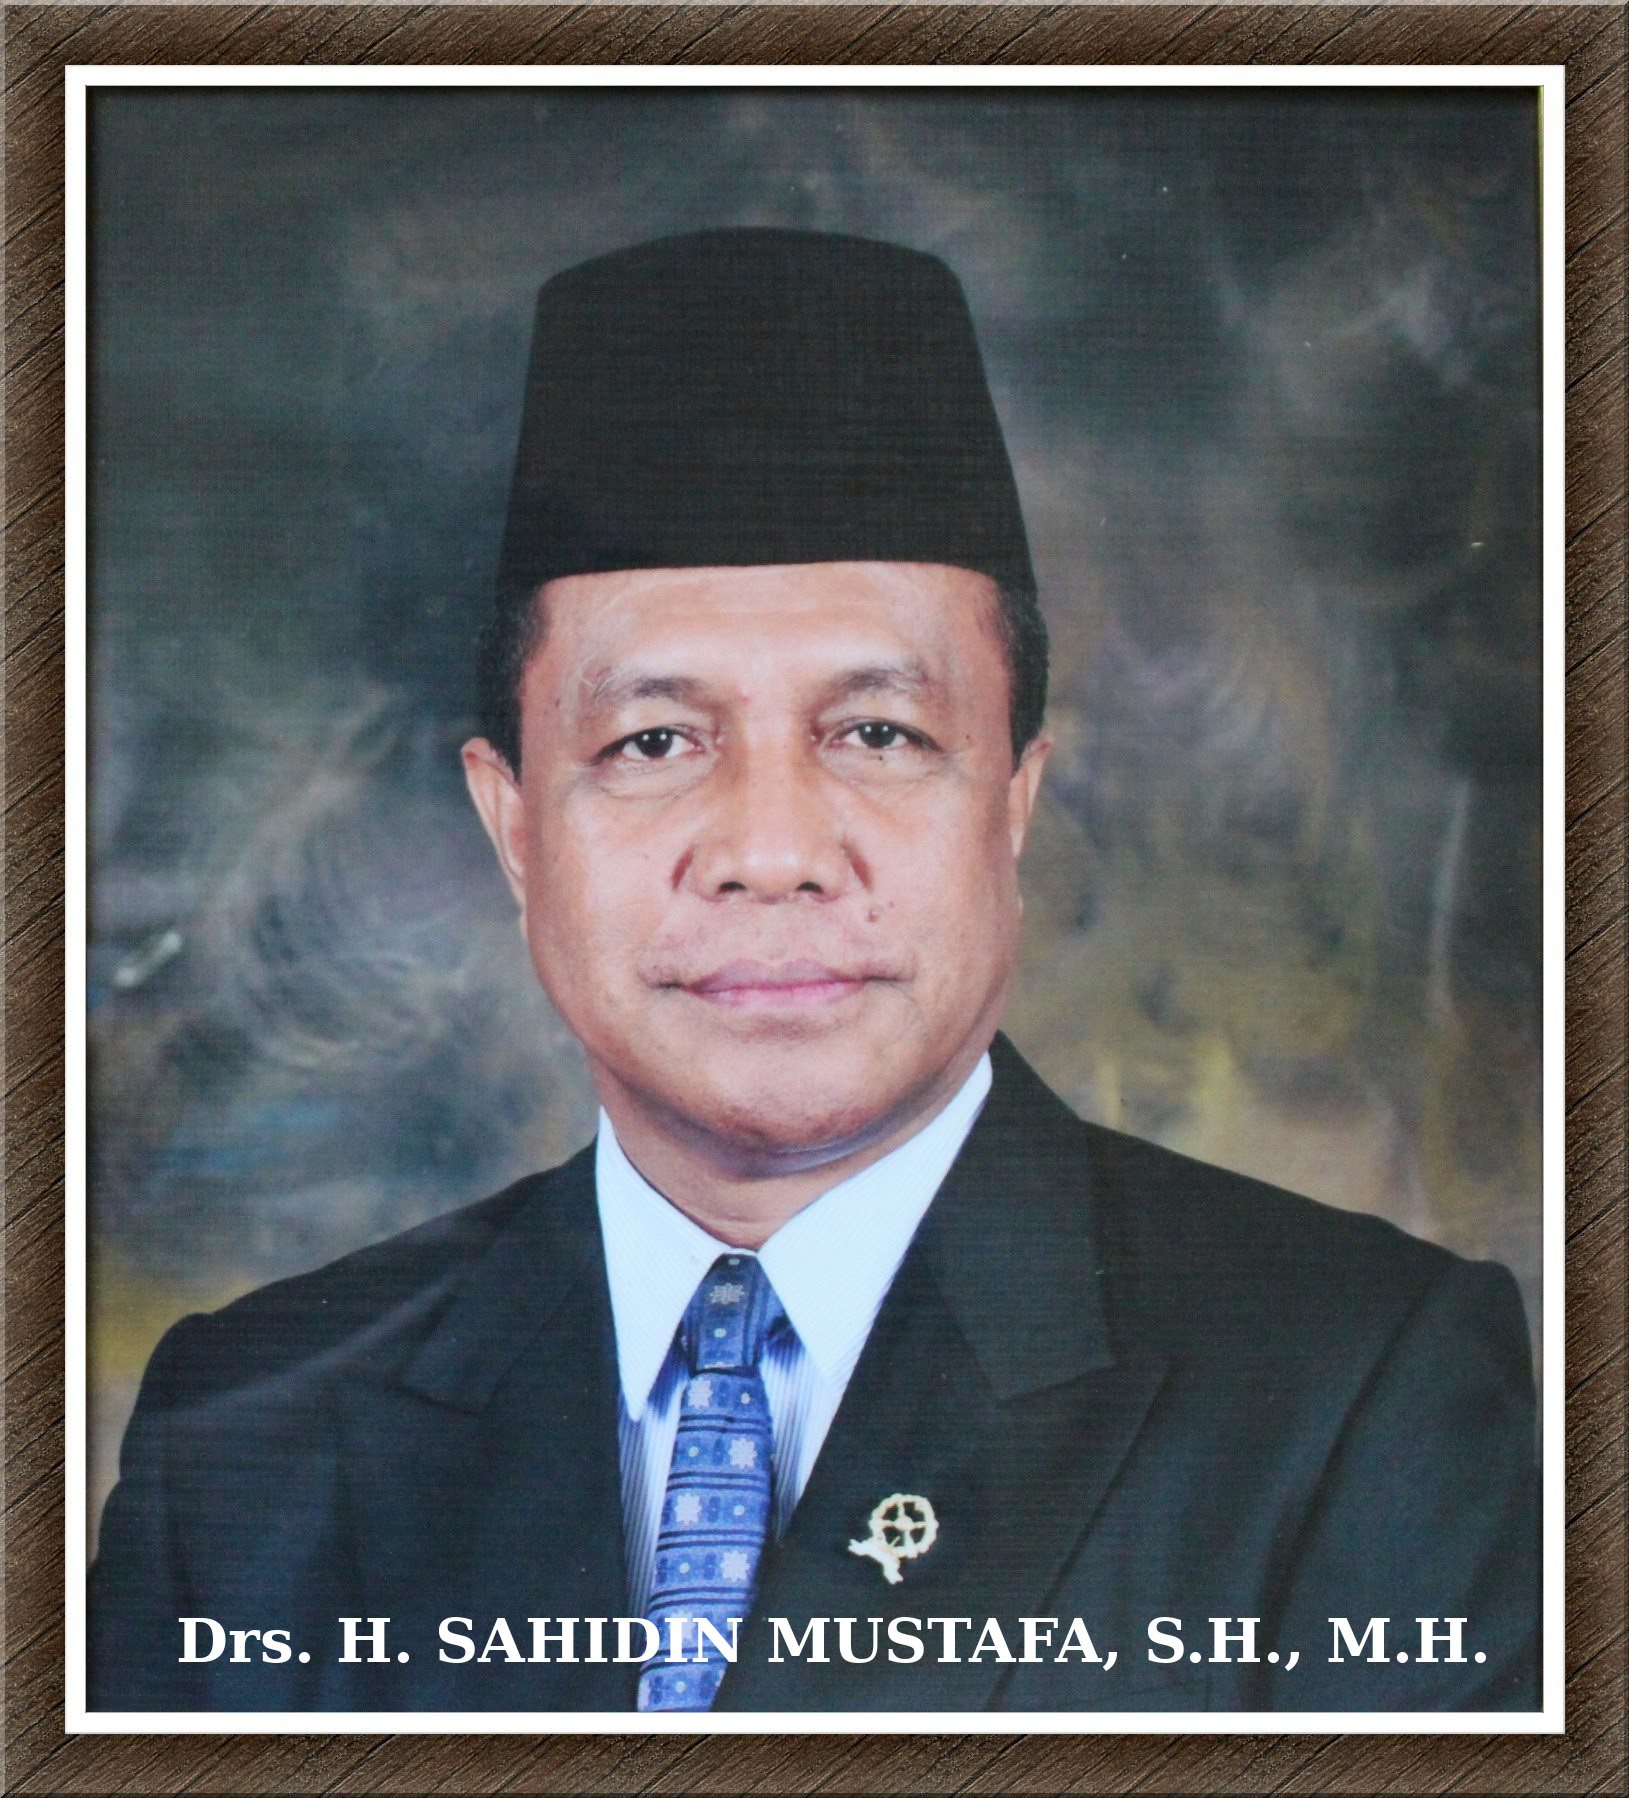 Drs. H. SAHIDIN MUSTAFA S.H. M